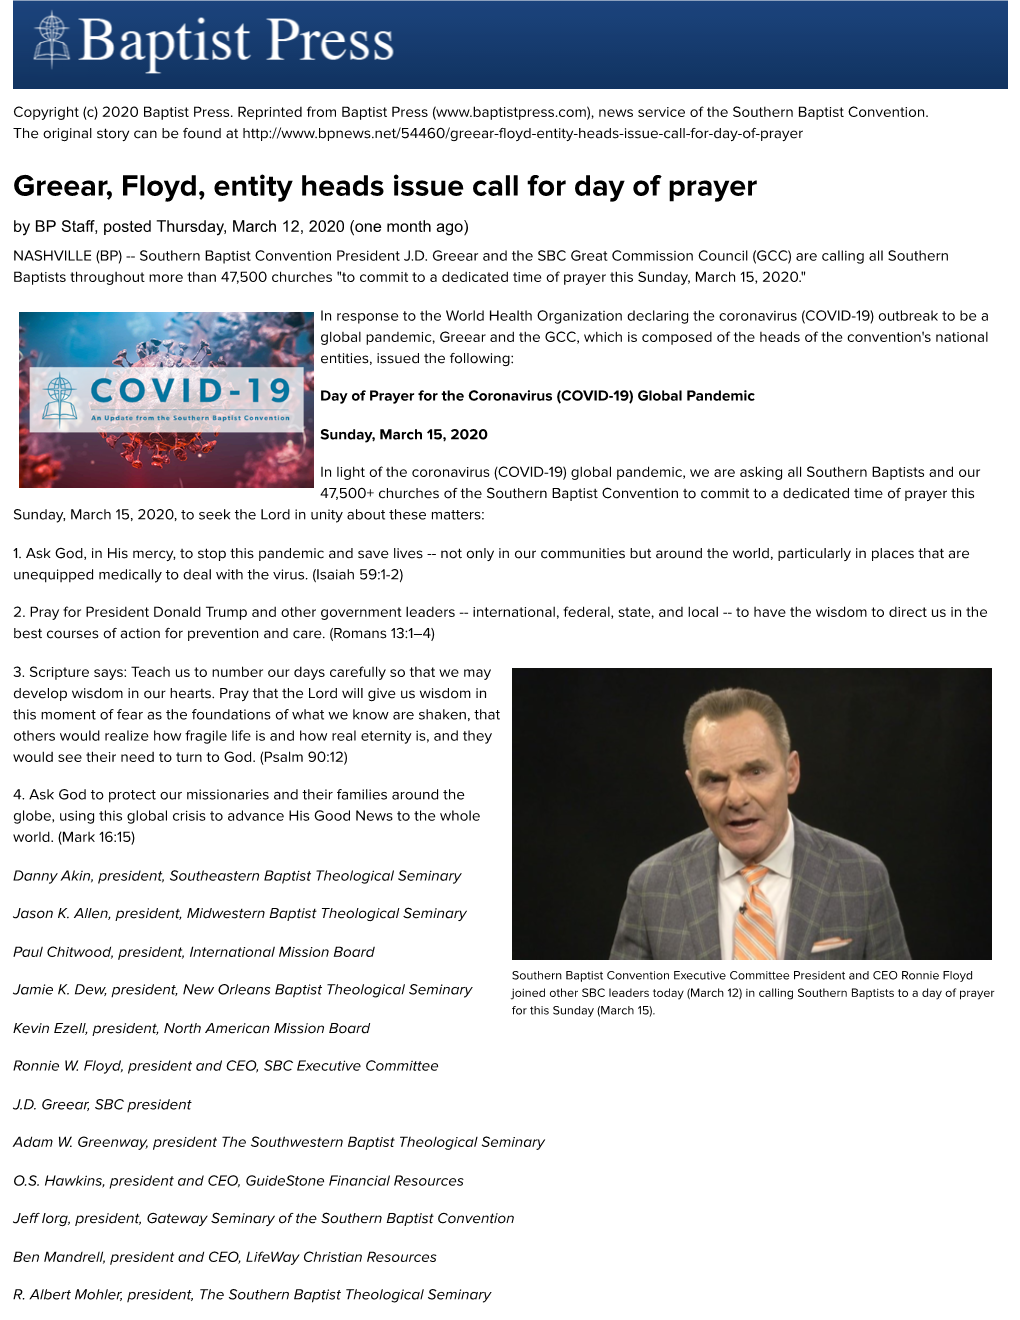 Greear, Floyd, Entity Heads Issue Call for Day of Prayer